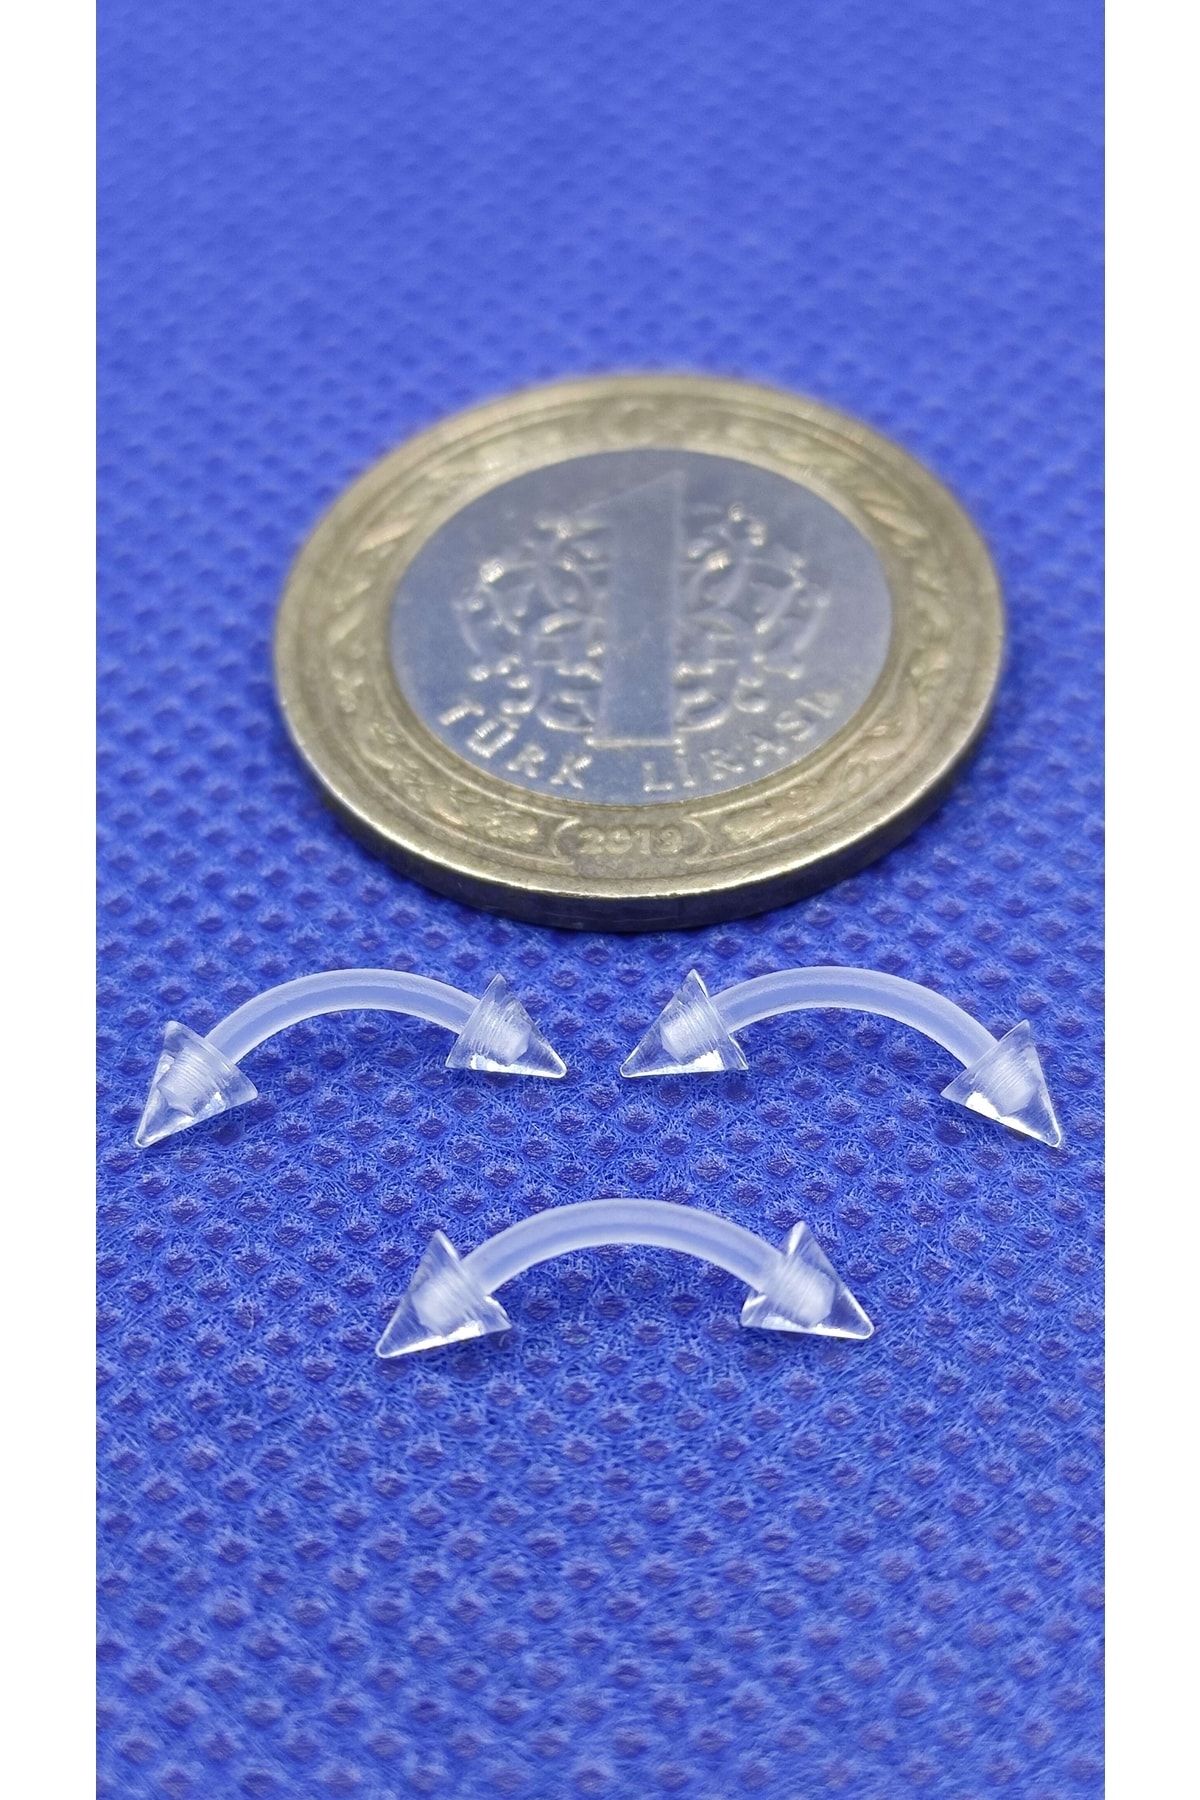 StillAccessory Anti Alerjik Bioplast 3'lü Şeffaf Kaş Piercing